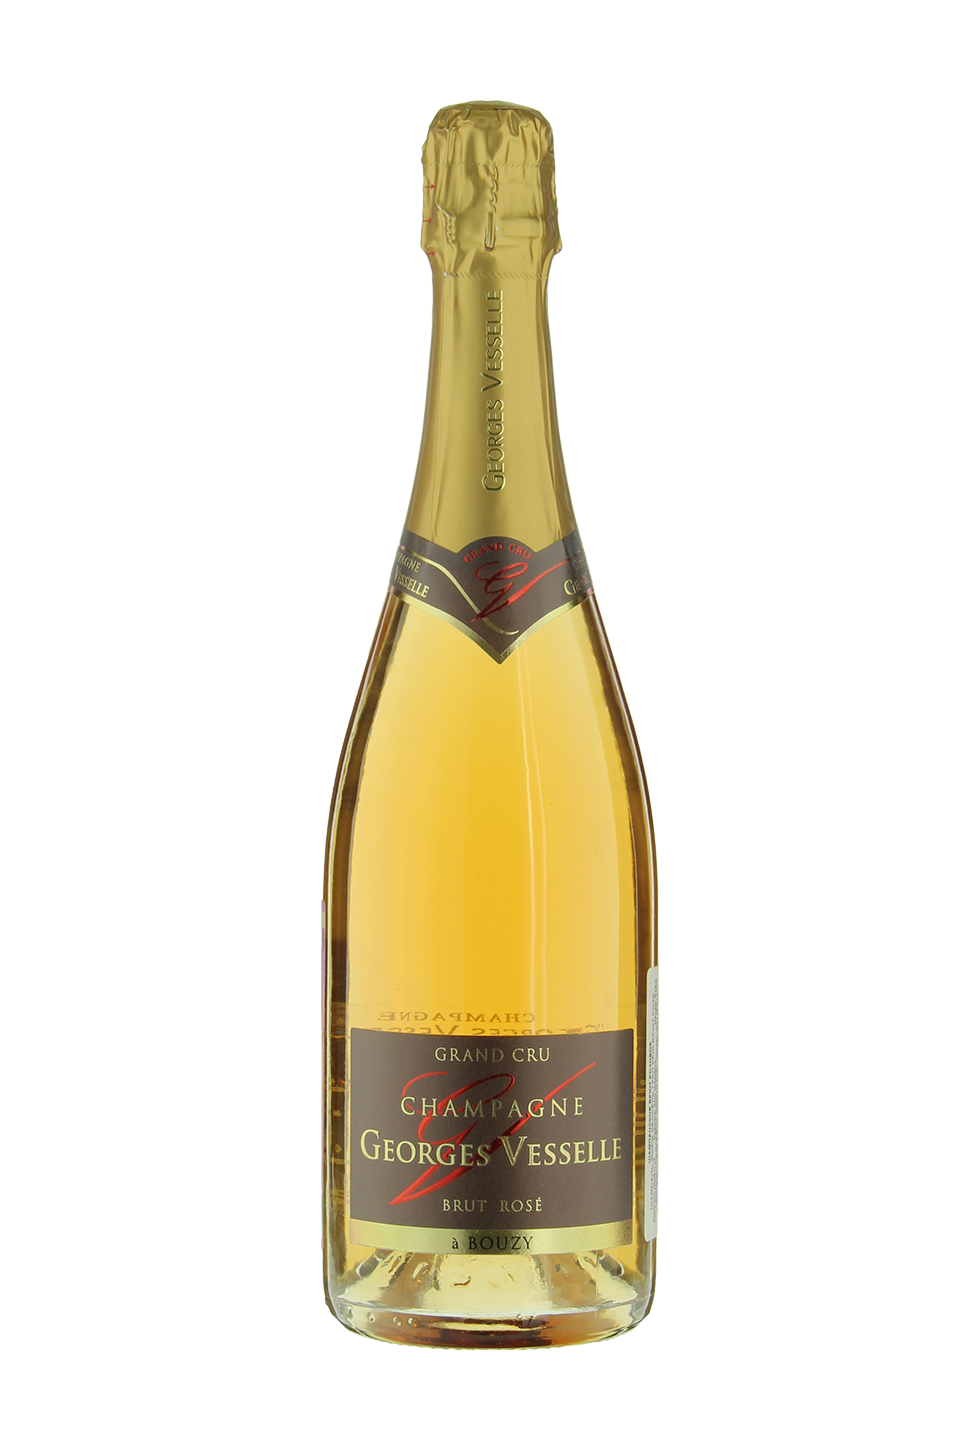 Купить Georges Vesselle Brut Rose Grand Cru Champagne в Москве